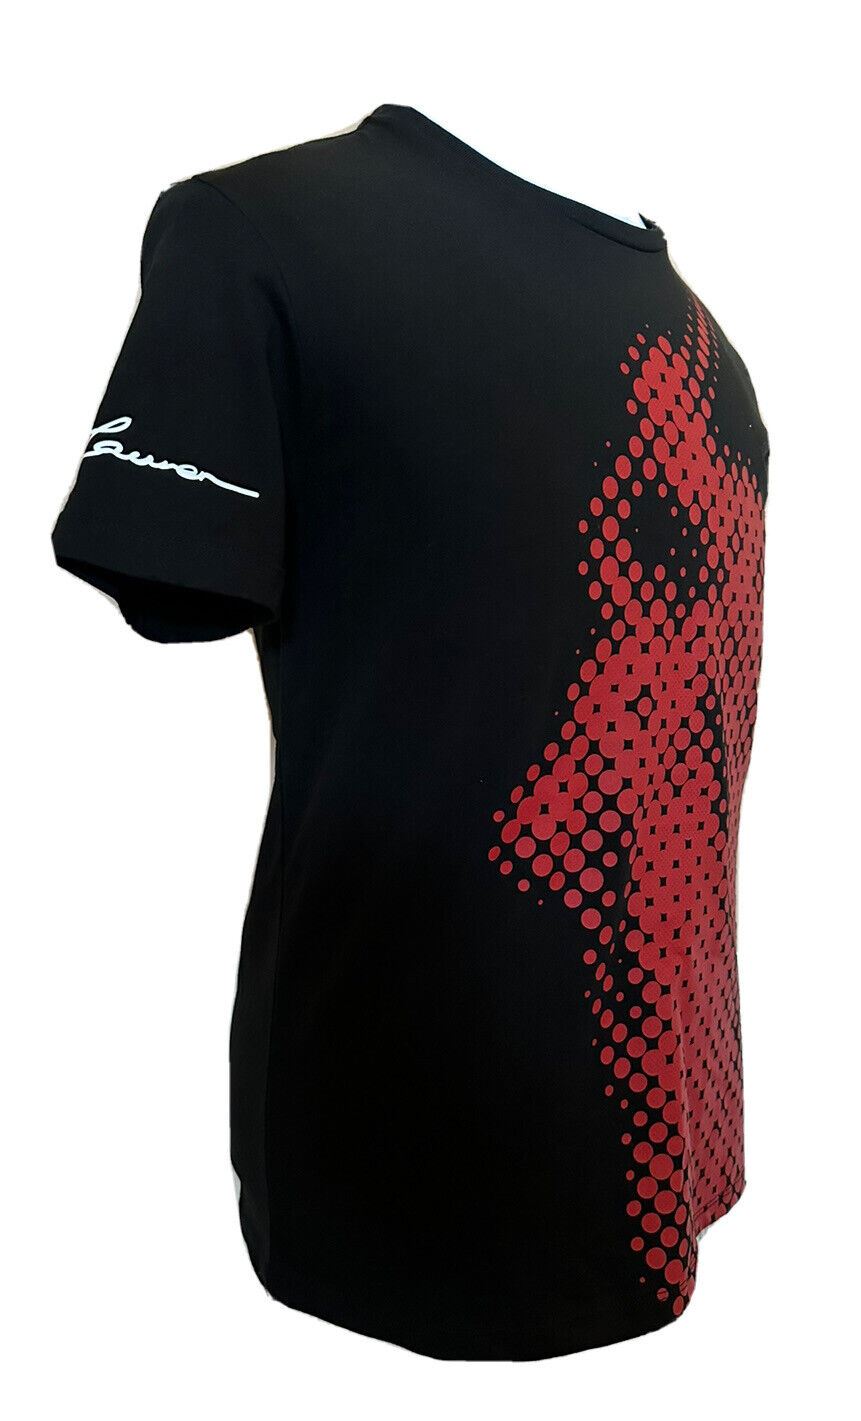 Черная футболка с короткими рукавами и логотипом Polo Ralph Lauren, размер NWT 65 долларов США (2XL) 